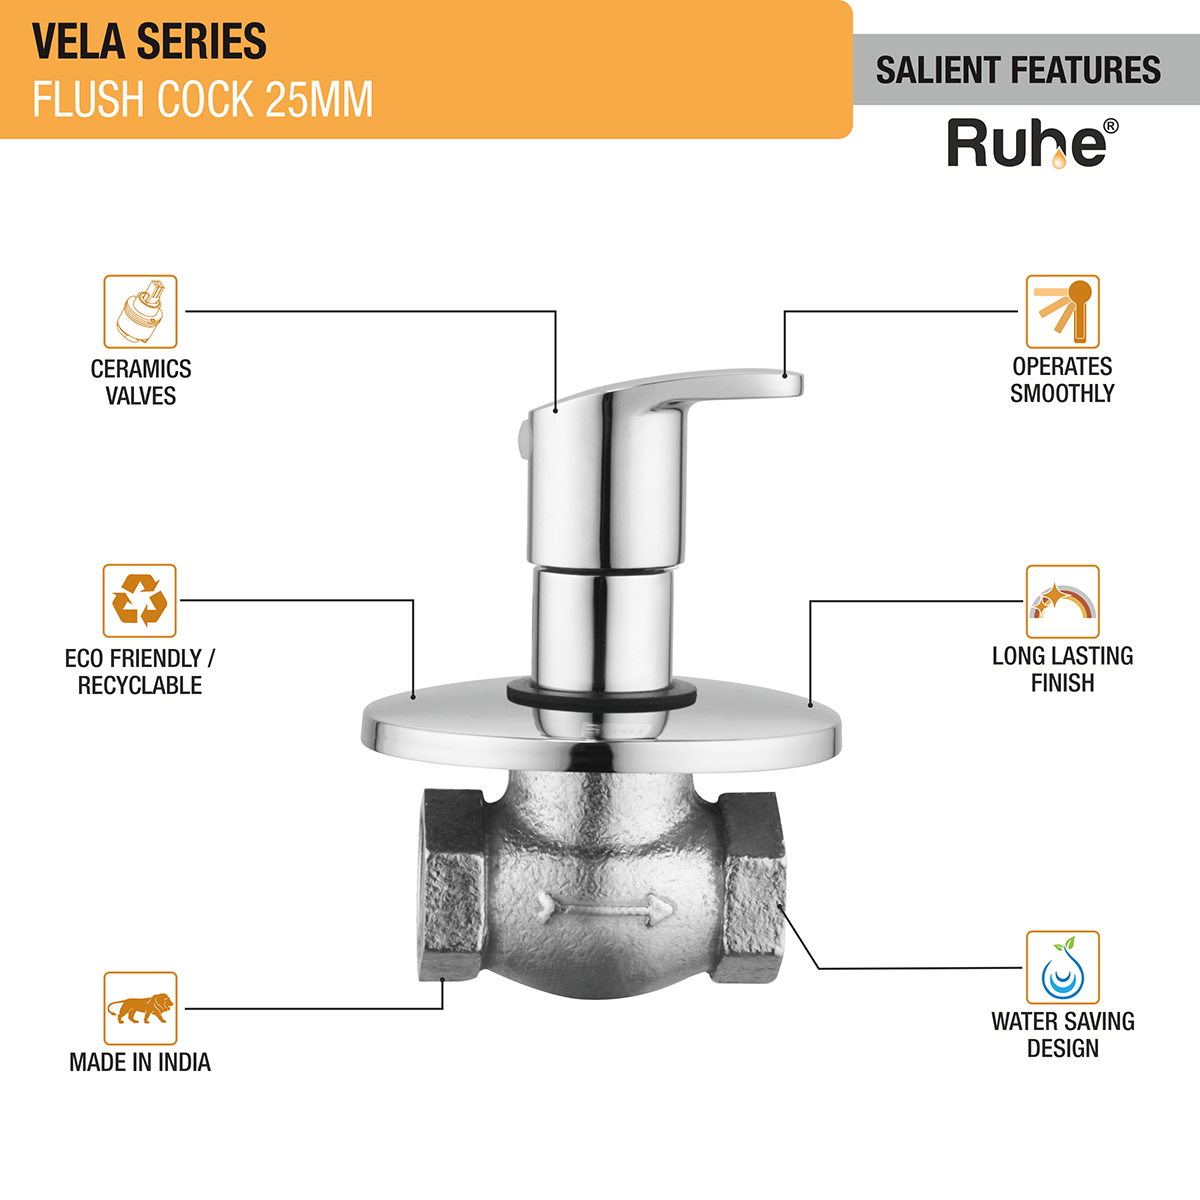 Vela Flush Valve Brass Faucet (25mm) features